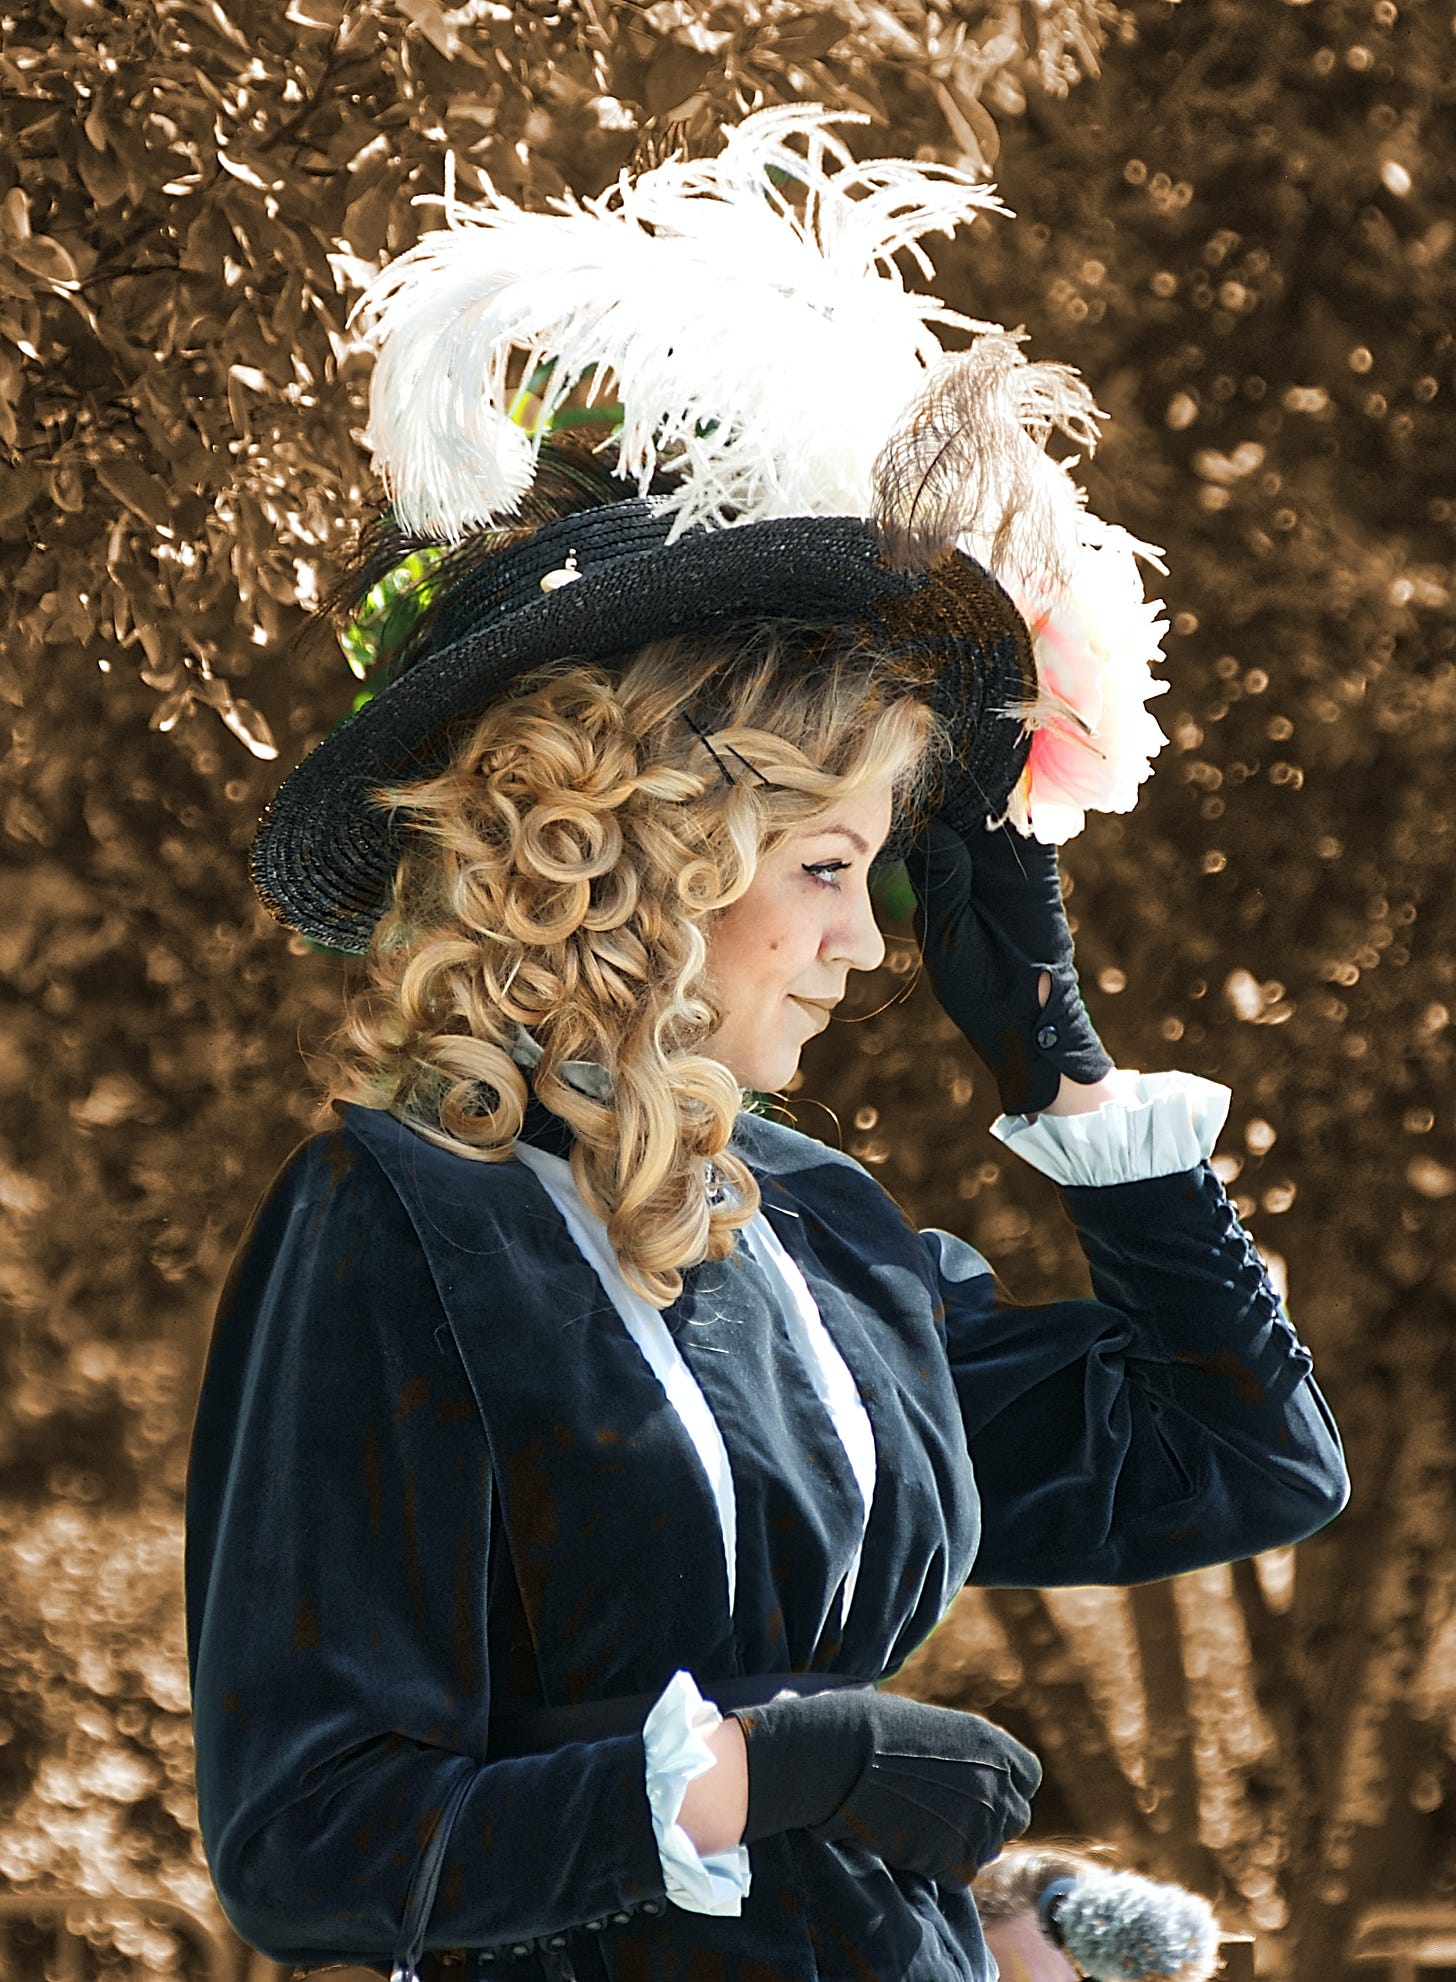 Femme mondaine de 1914, a woman in victorian era attire